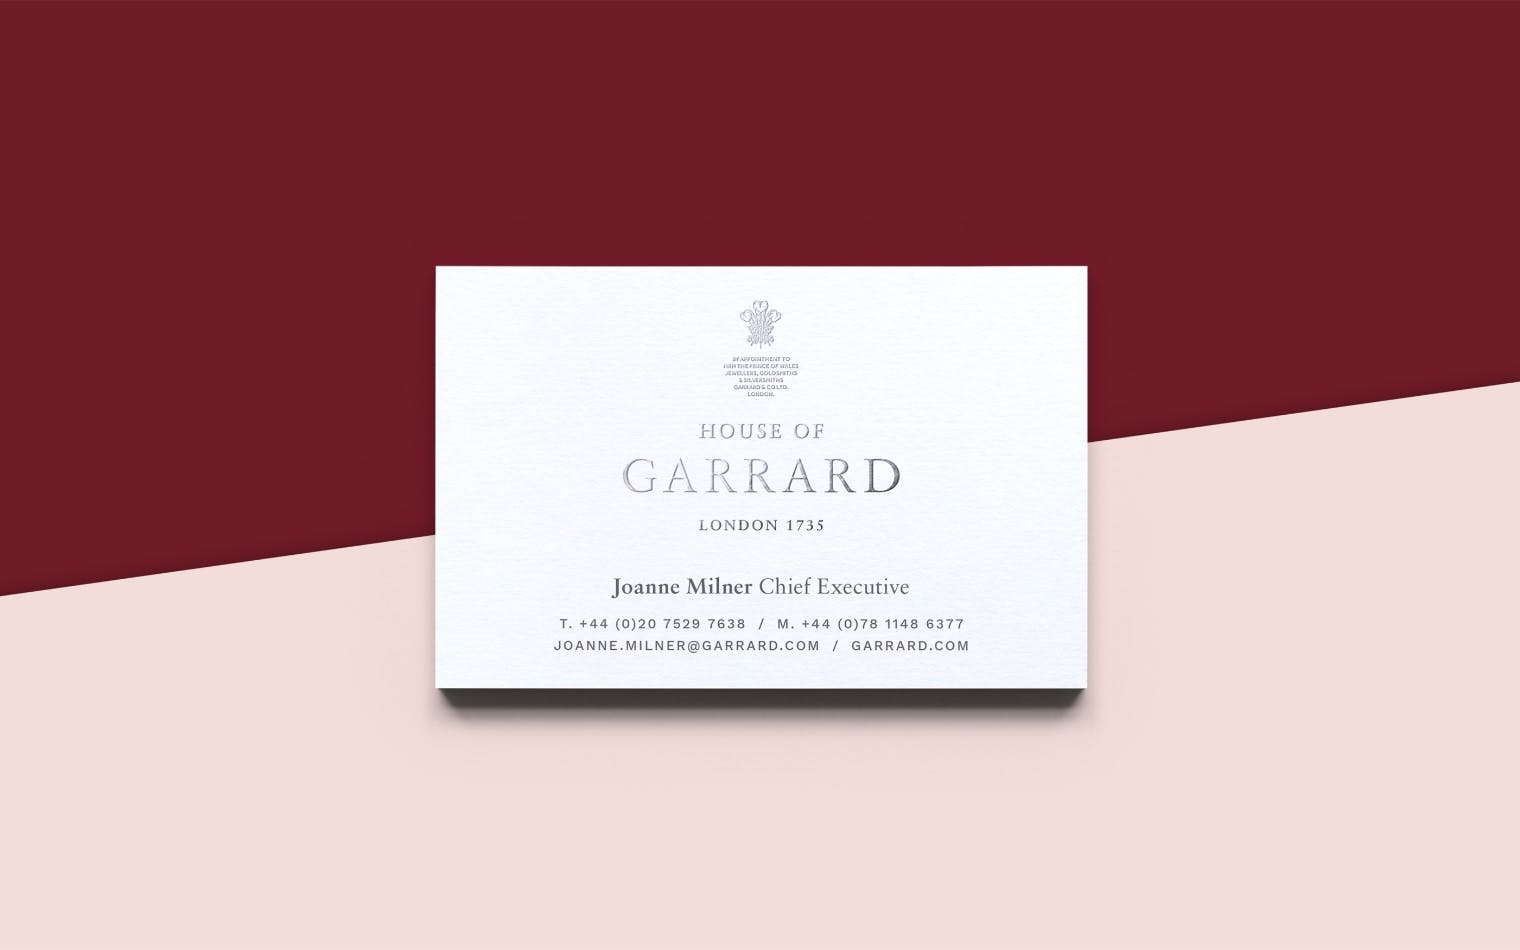 Garrard | Steve Edge Design